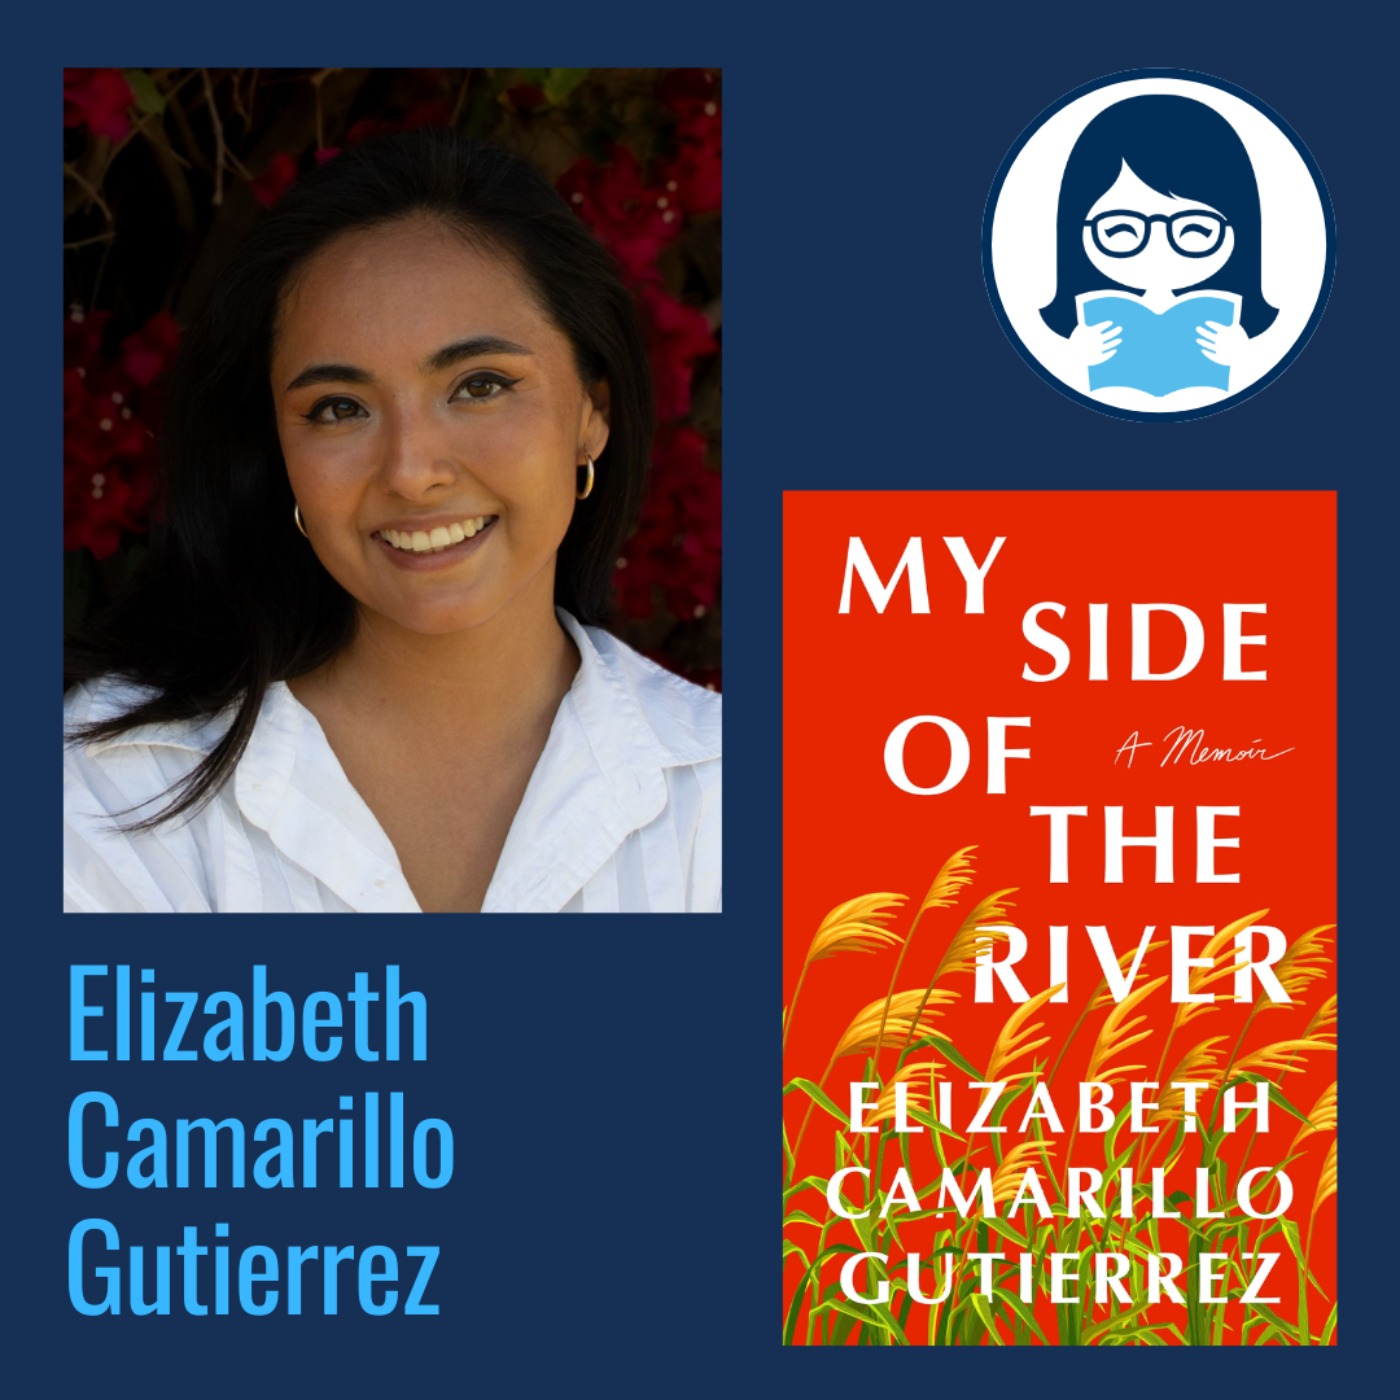 Elizabeth Camarillo Gutierrez, MY SIDE OF THE RIVER: A Memoir